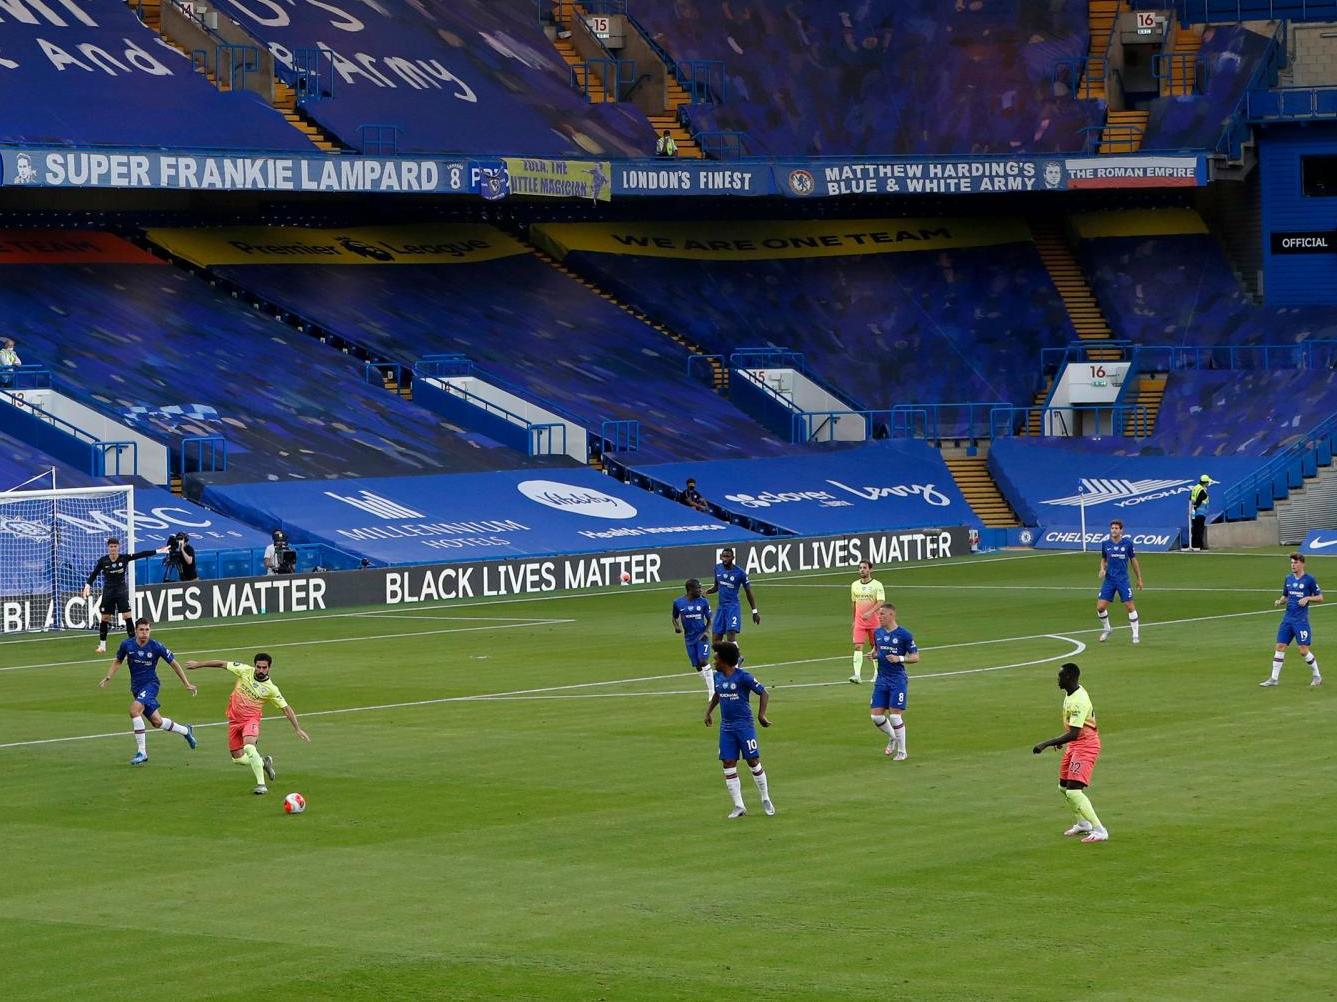 Chelsea took on Man City at Stamford Bridge